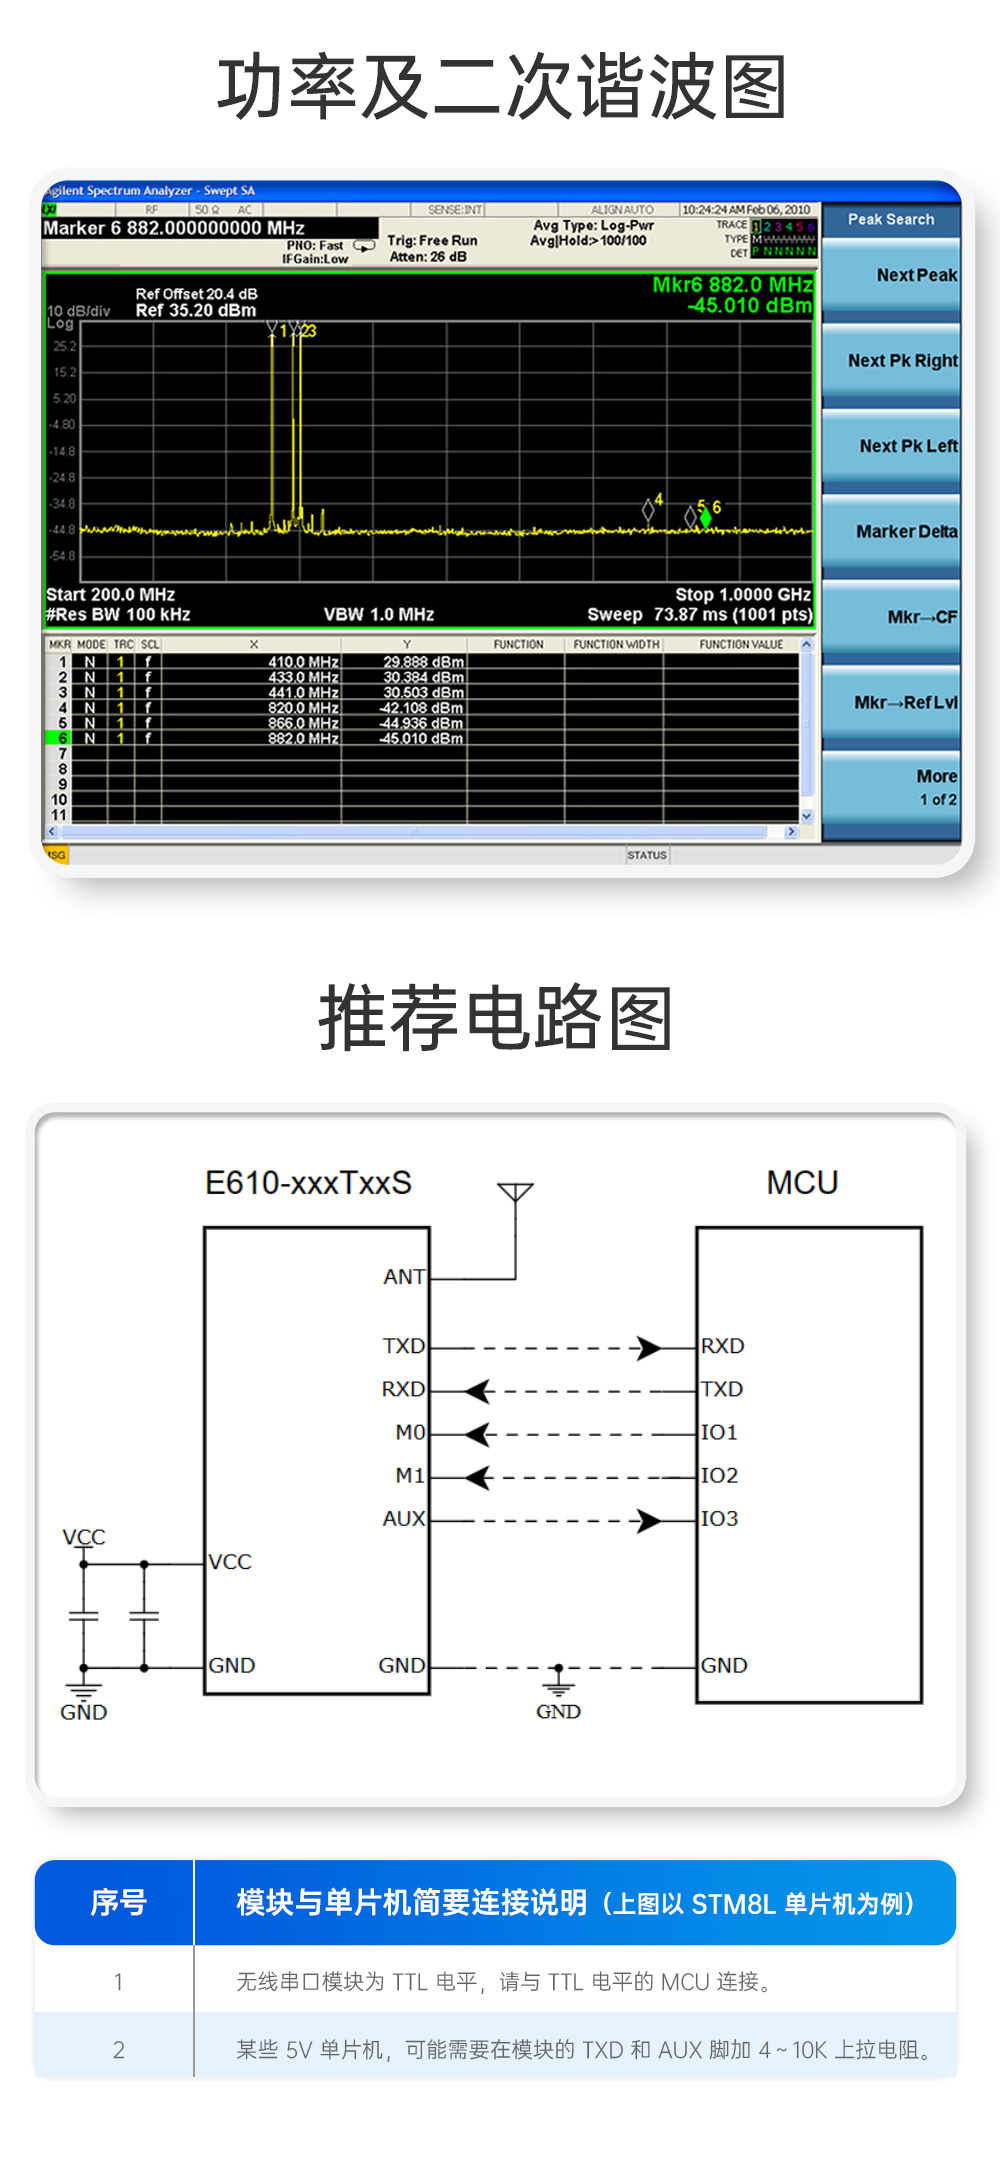 E610-900T30S 无线高速连续传输模块 (16)